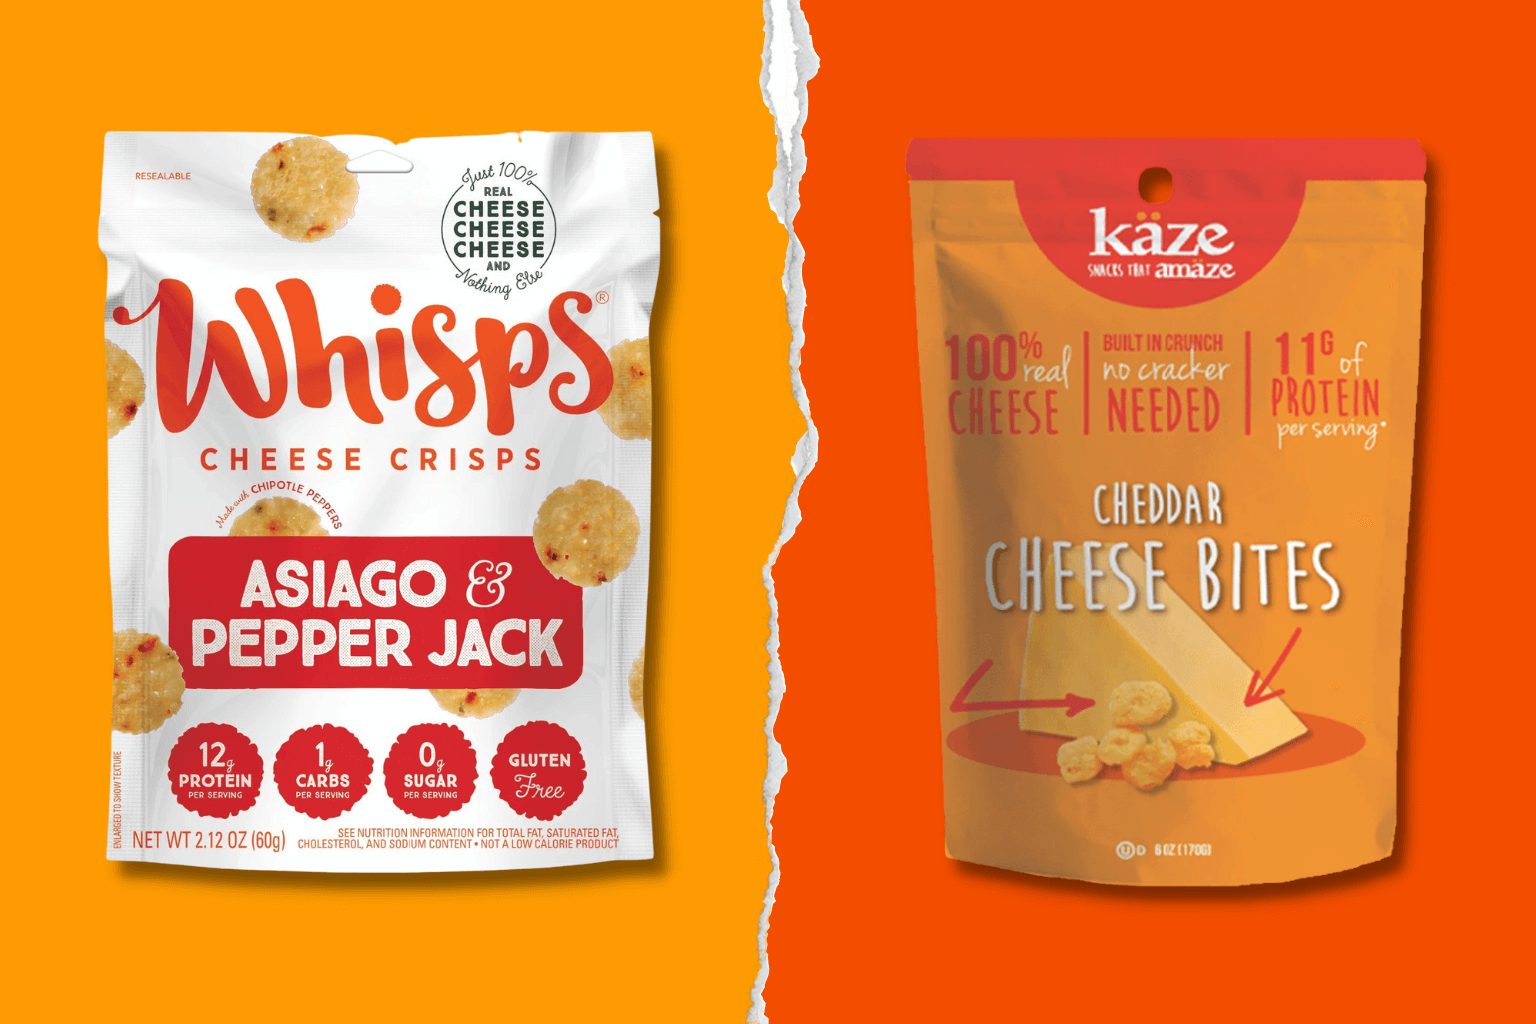 Whisps Cheese Crisps vs. Käze Cheese